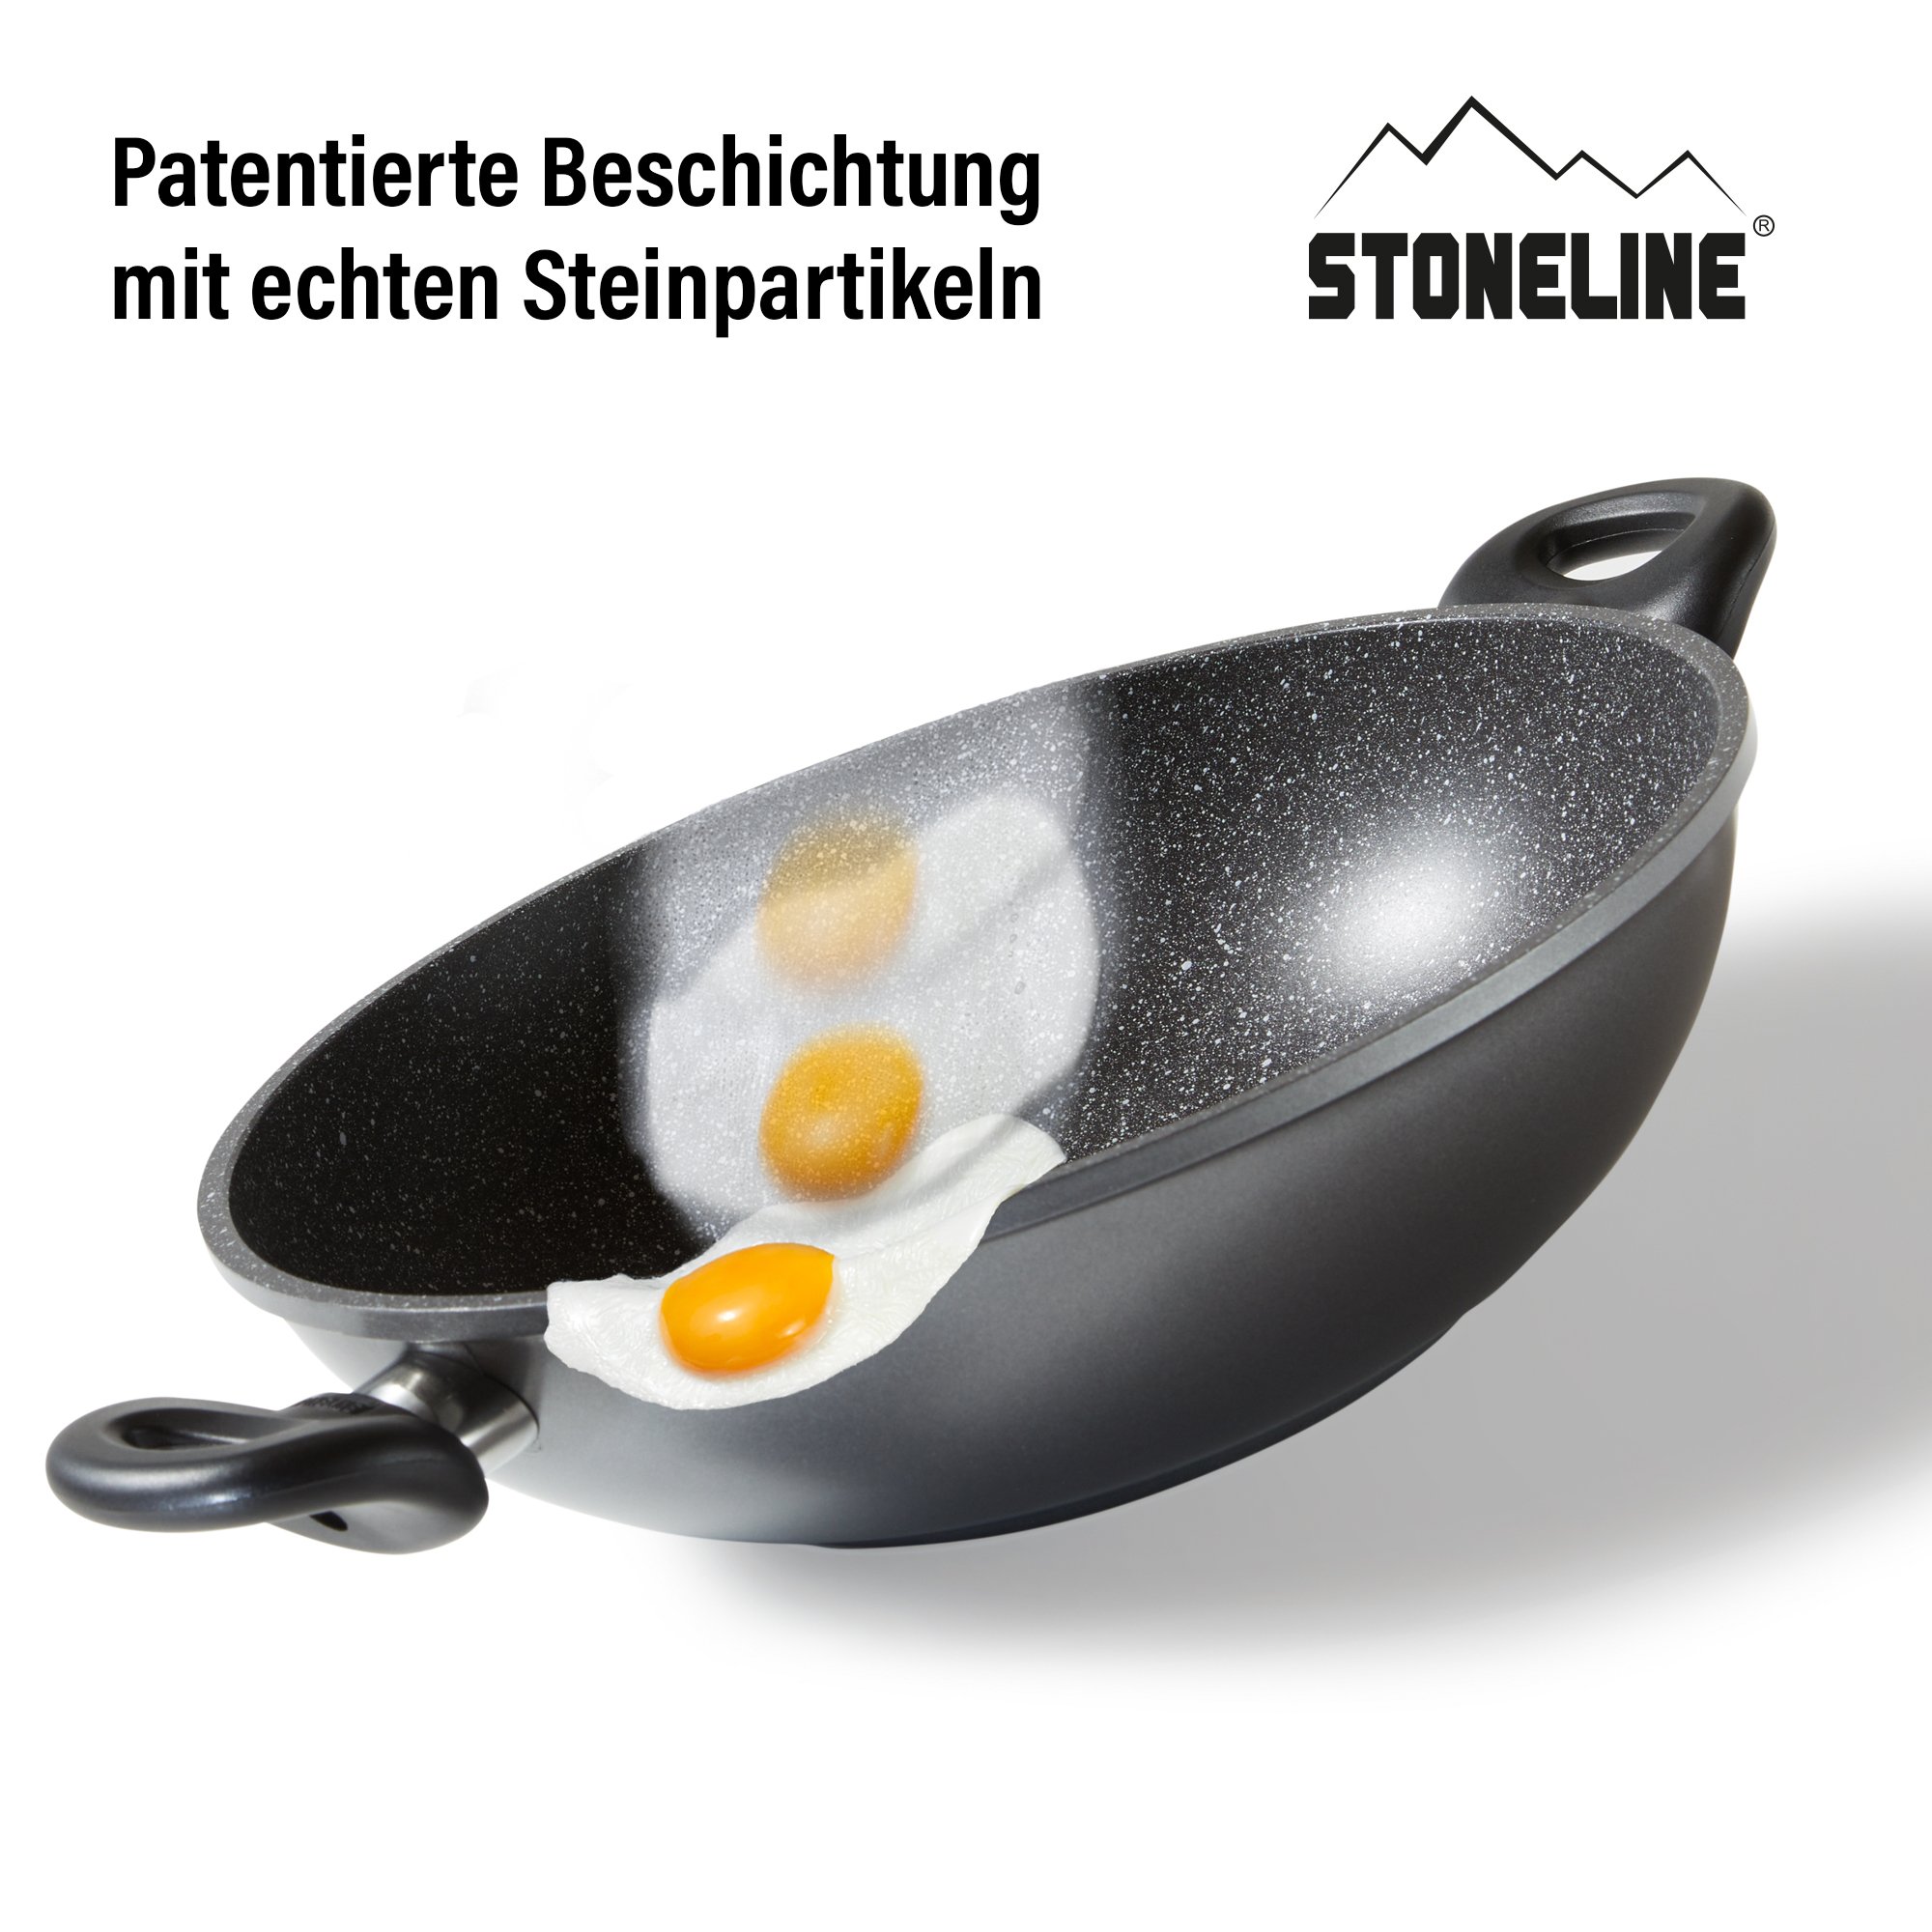 STONELINE® Wok Pan 32 cm, with Lid, Non-Stick Pan | CLASSIC